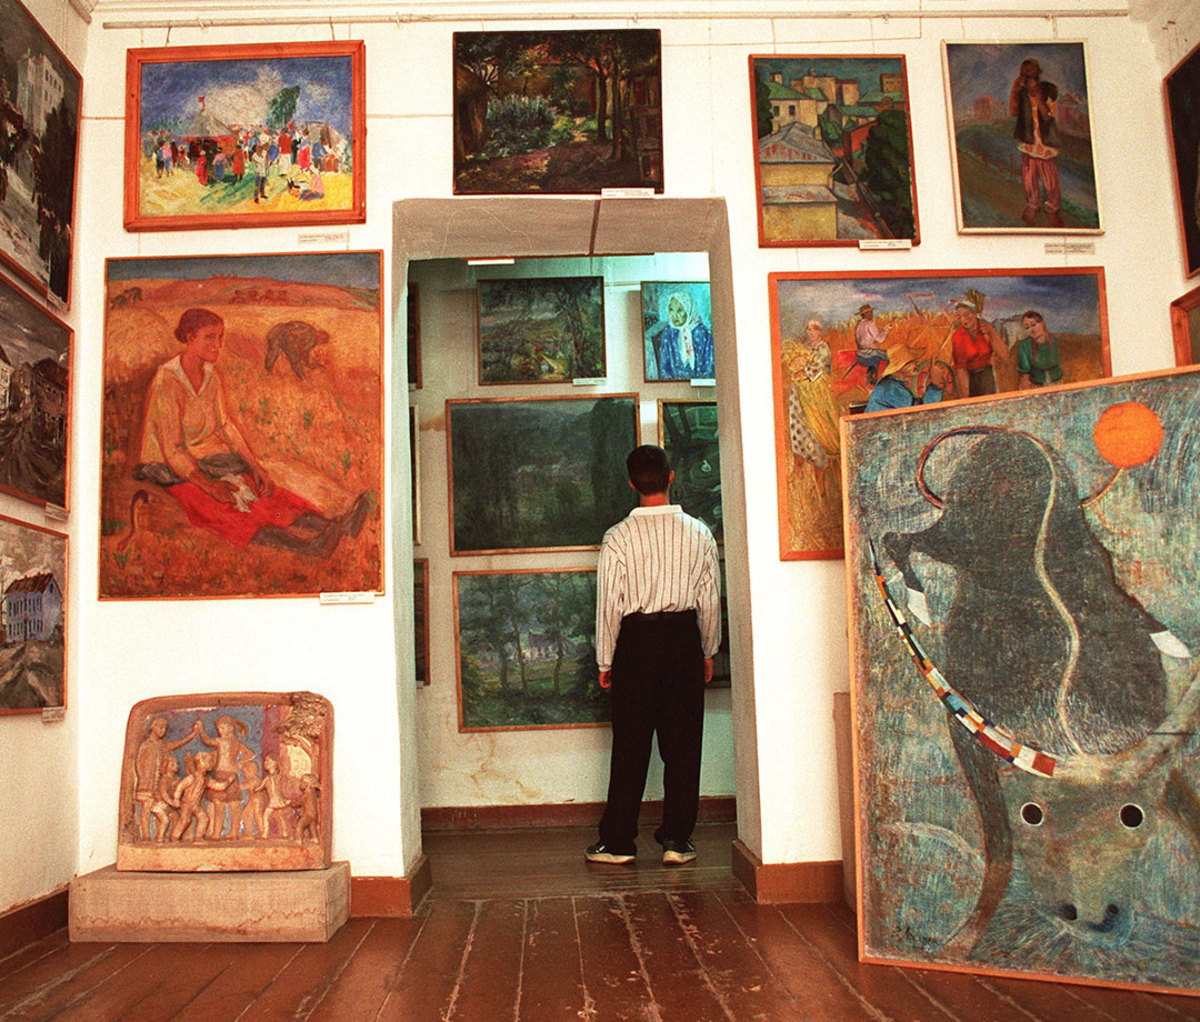 extensive collection of gulag-era art in a museum in Nukus, Uzbekistan in October 2001